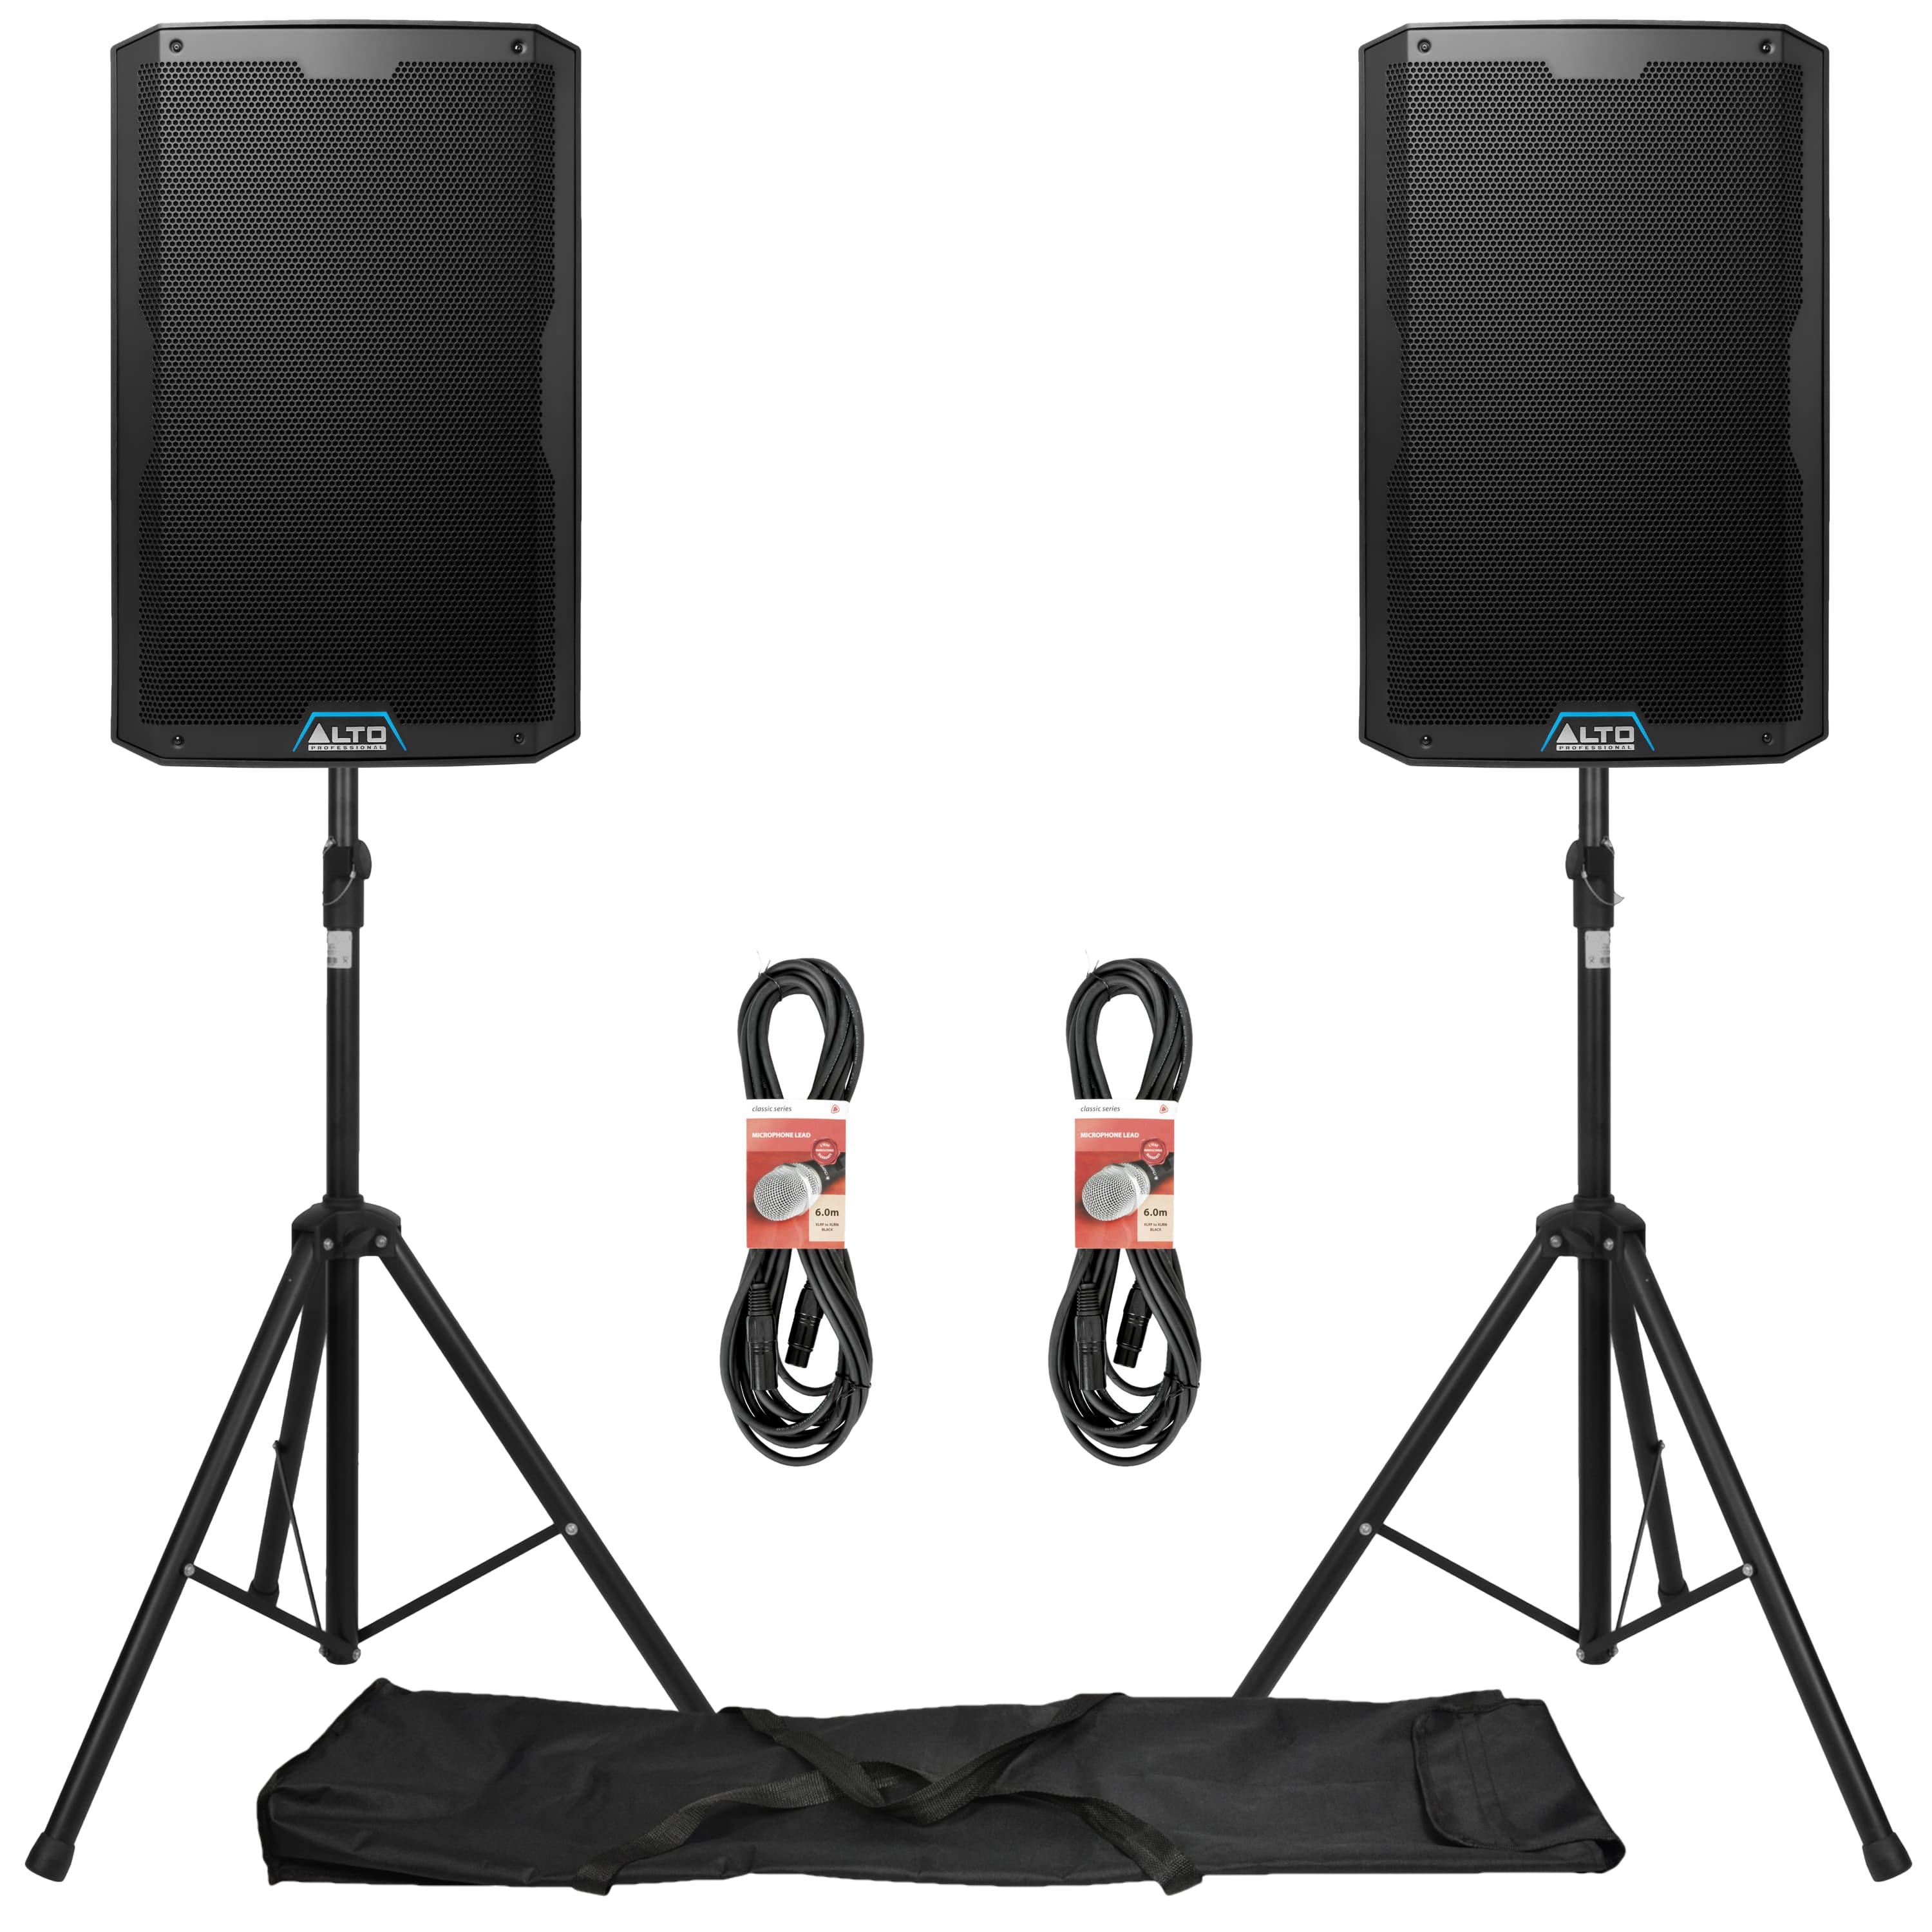 Alto Professional TS415 Speaker Package